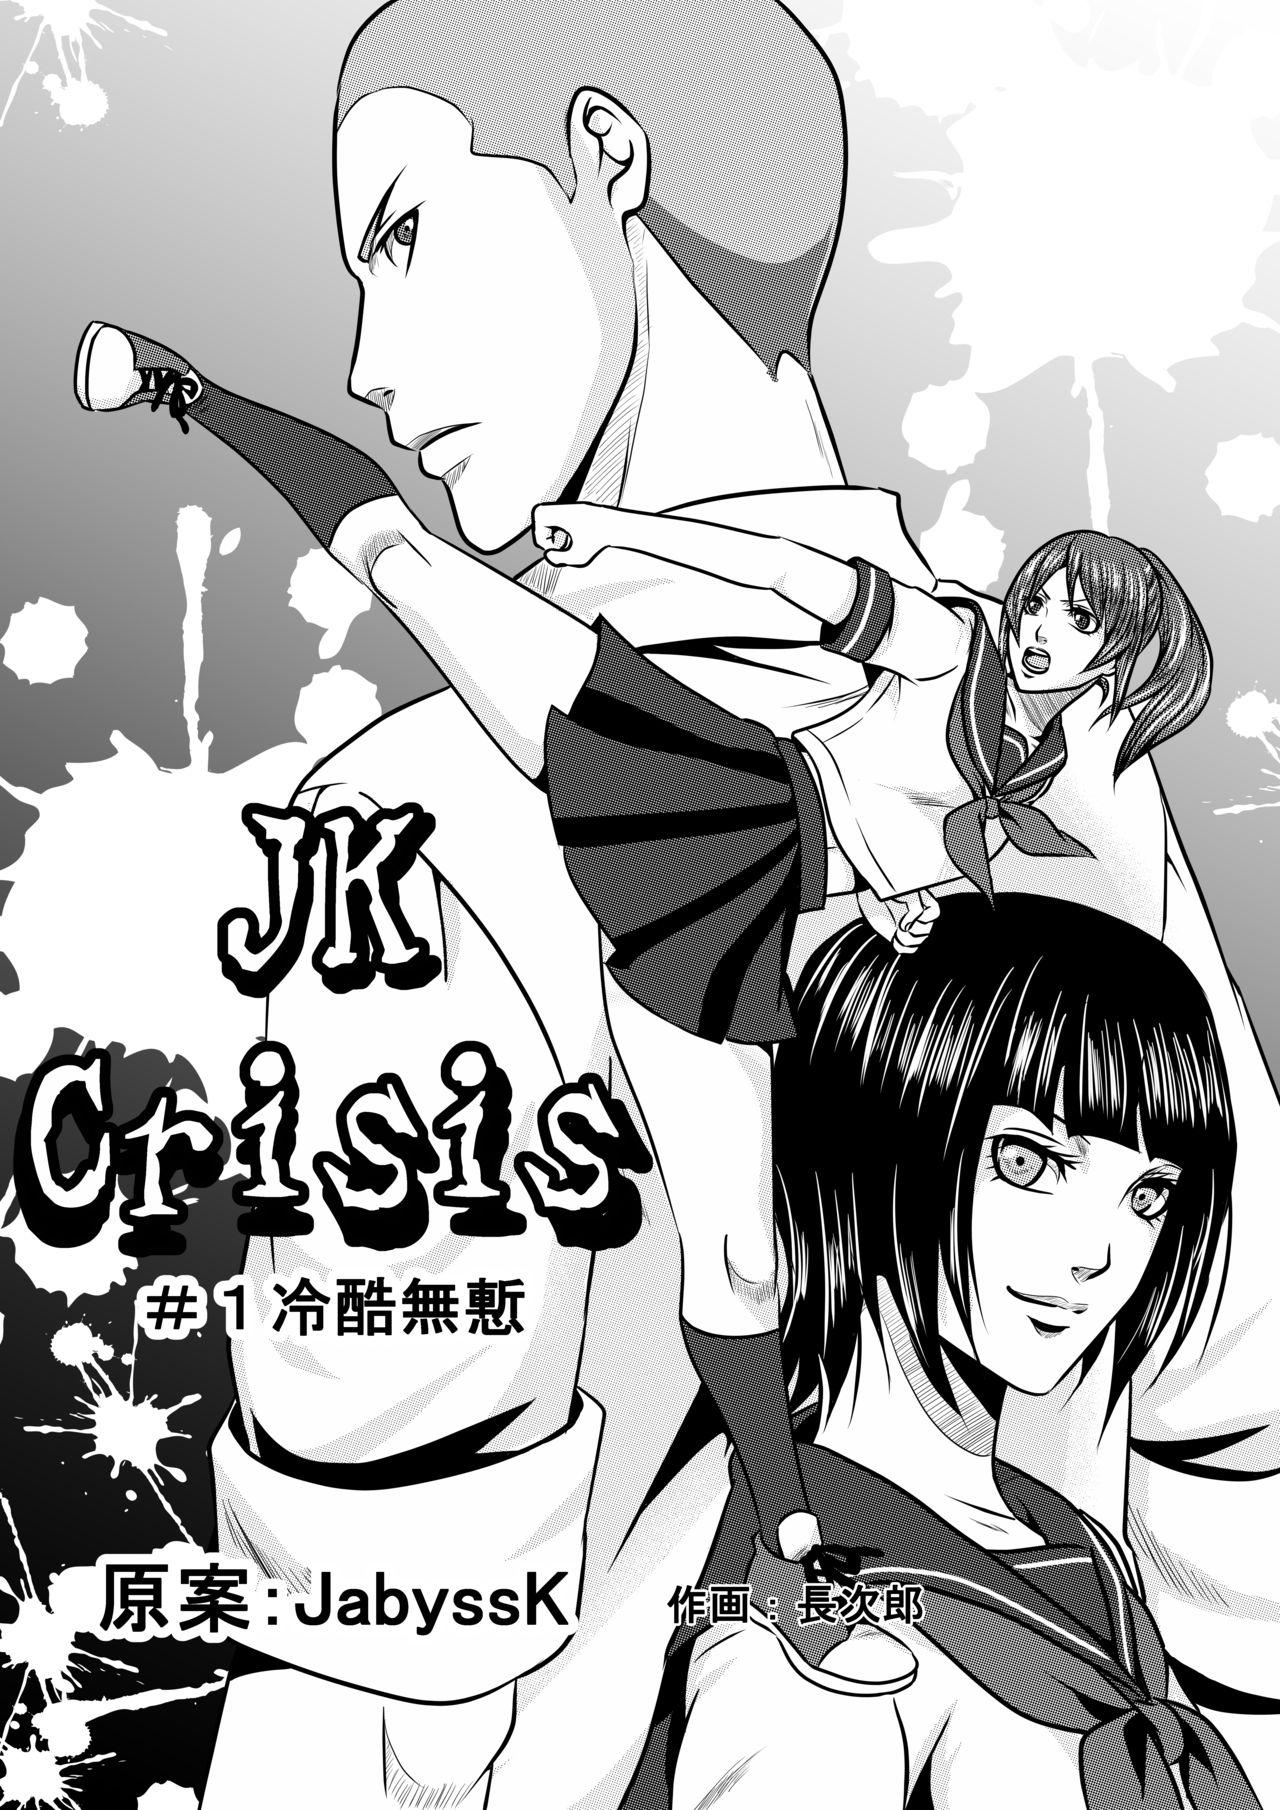 Gayfuck JK Crisis #1_ Cold and Cruel + JK Crisis #2_ Athna + JK Crisis 3 - Original Free Fucking - Picture 1